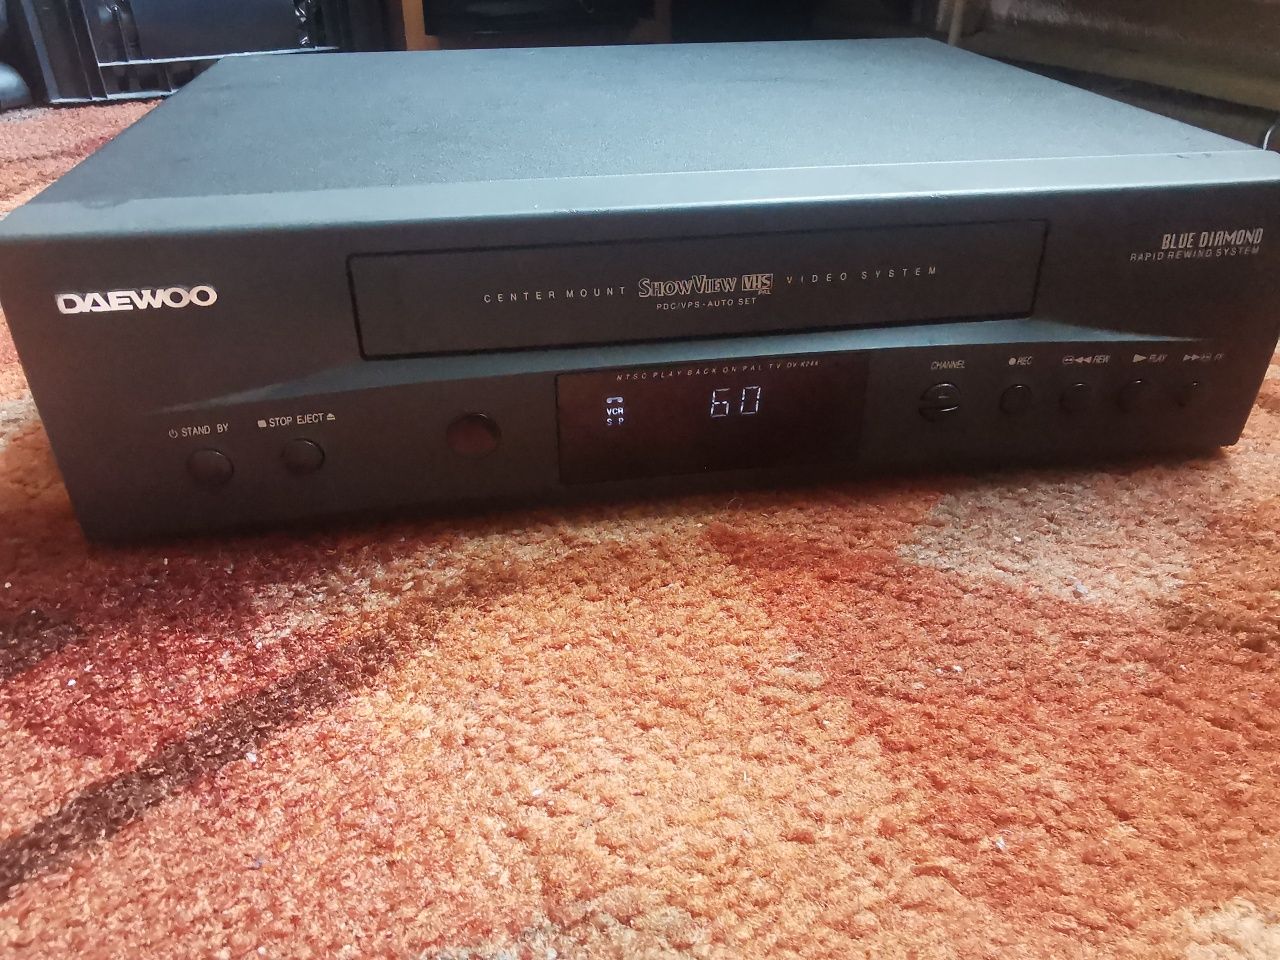 Video recorder DAEWOO made in U. K.